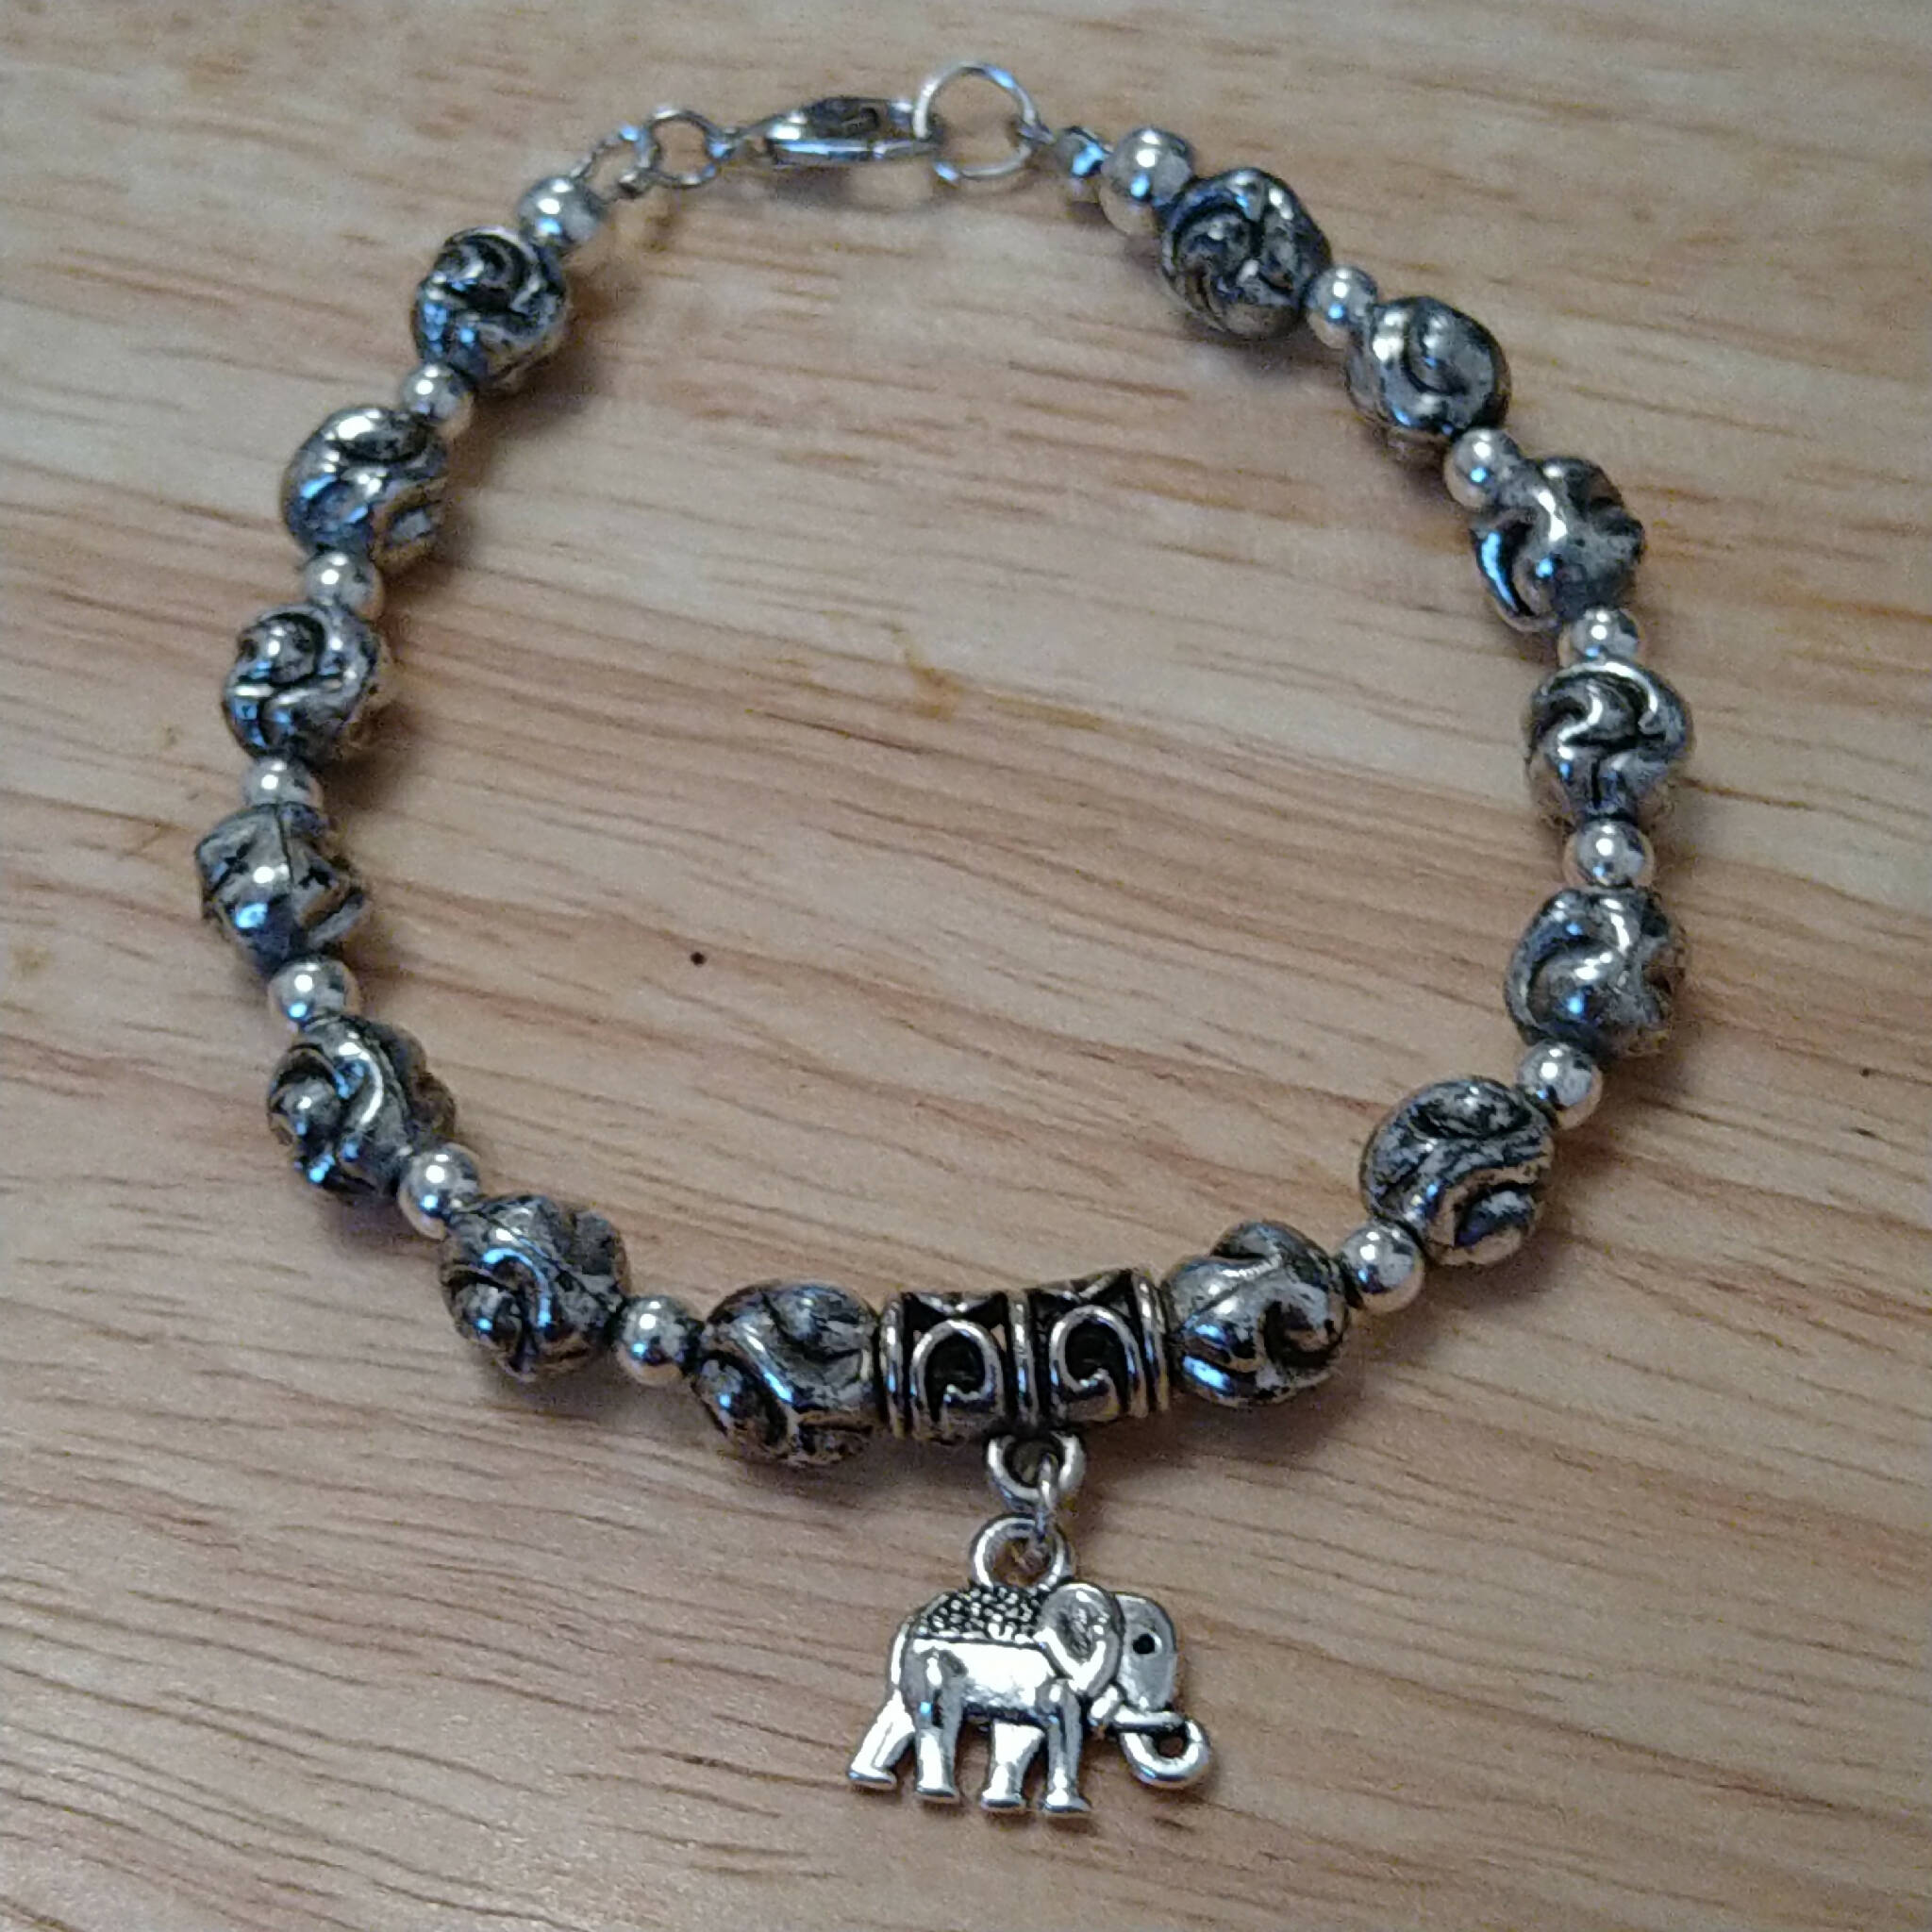 Silver coloured bracelet with elephant charm, handmade using recycled beads. 19cm length